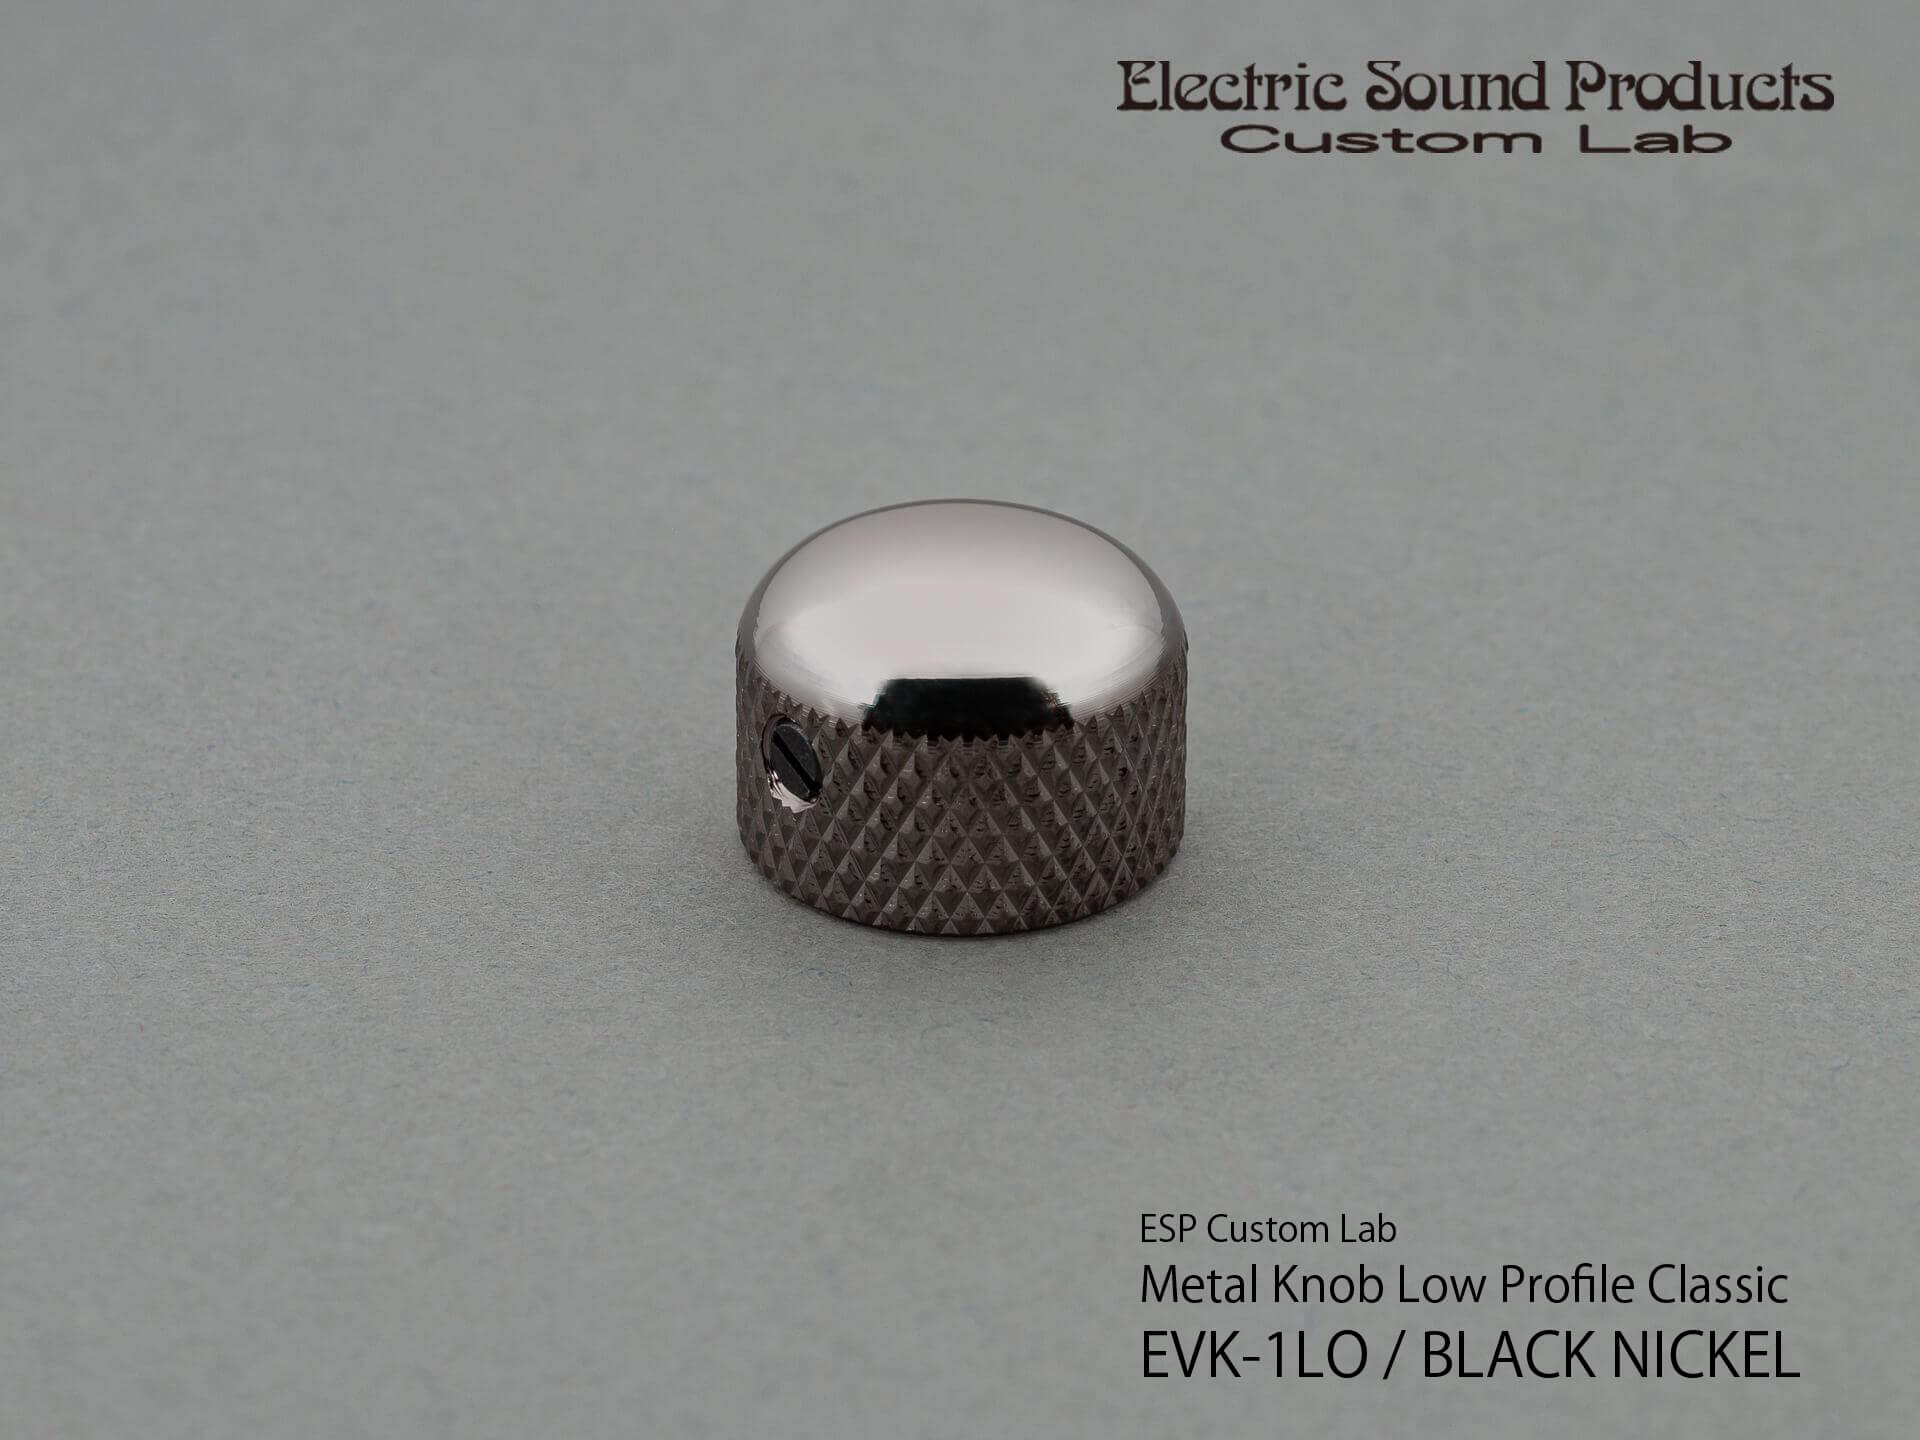 ESP Custom Lab Metal Knob Low Profile Classic EVK-1LO (ボリューム/トーンノブ)(イーエスピー)